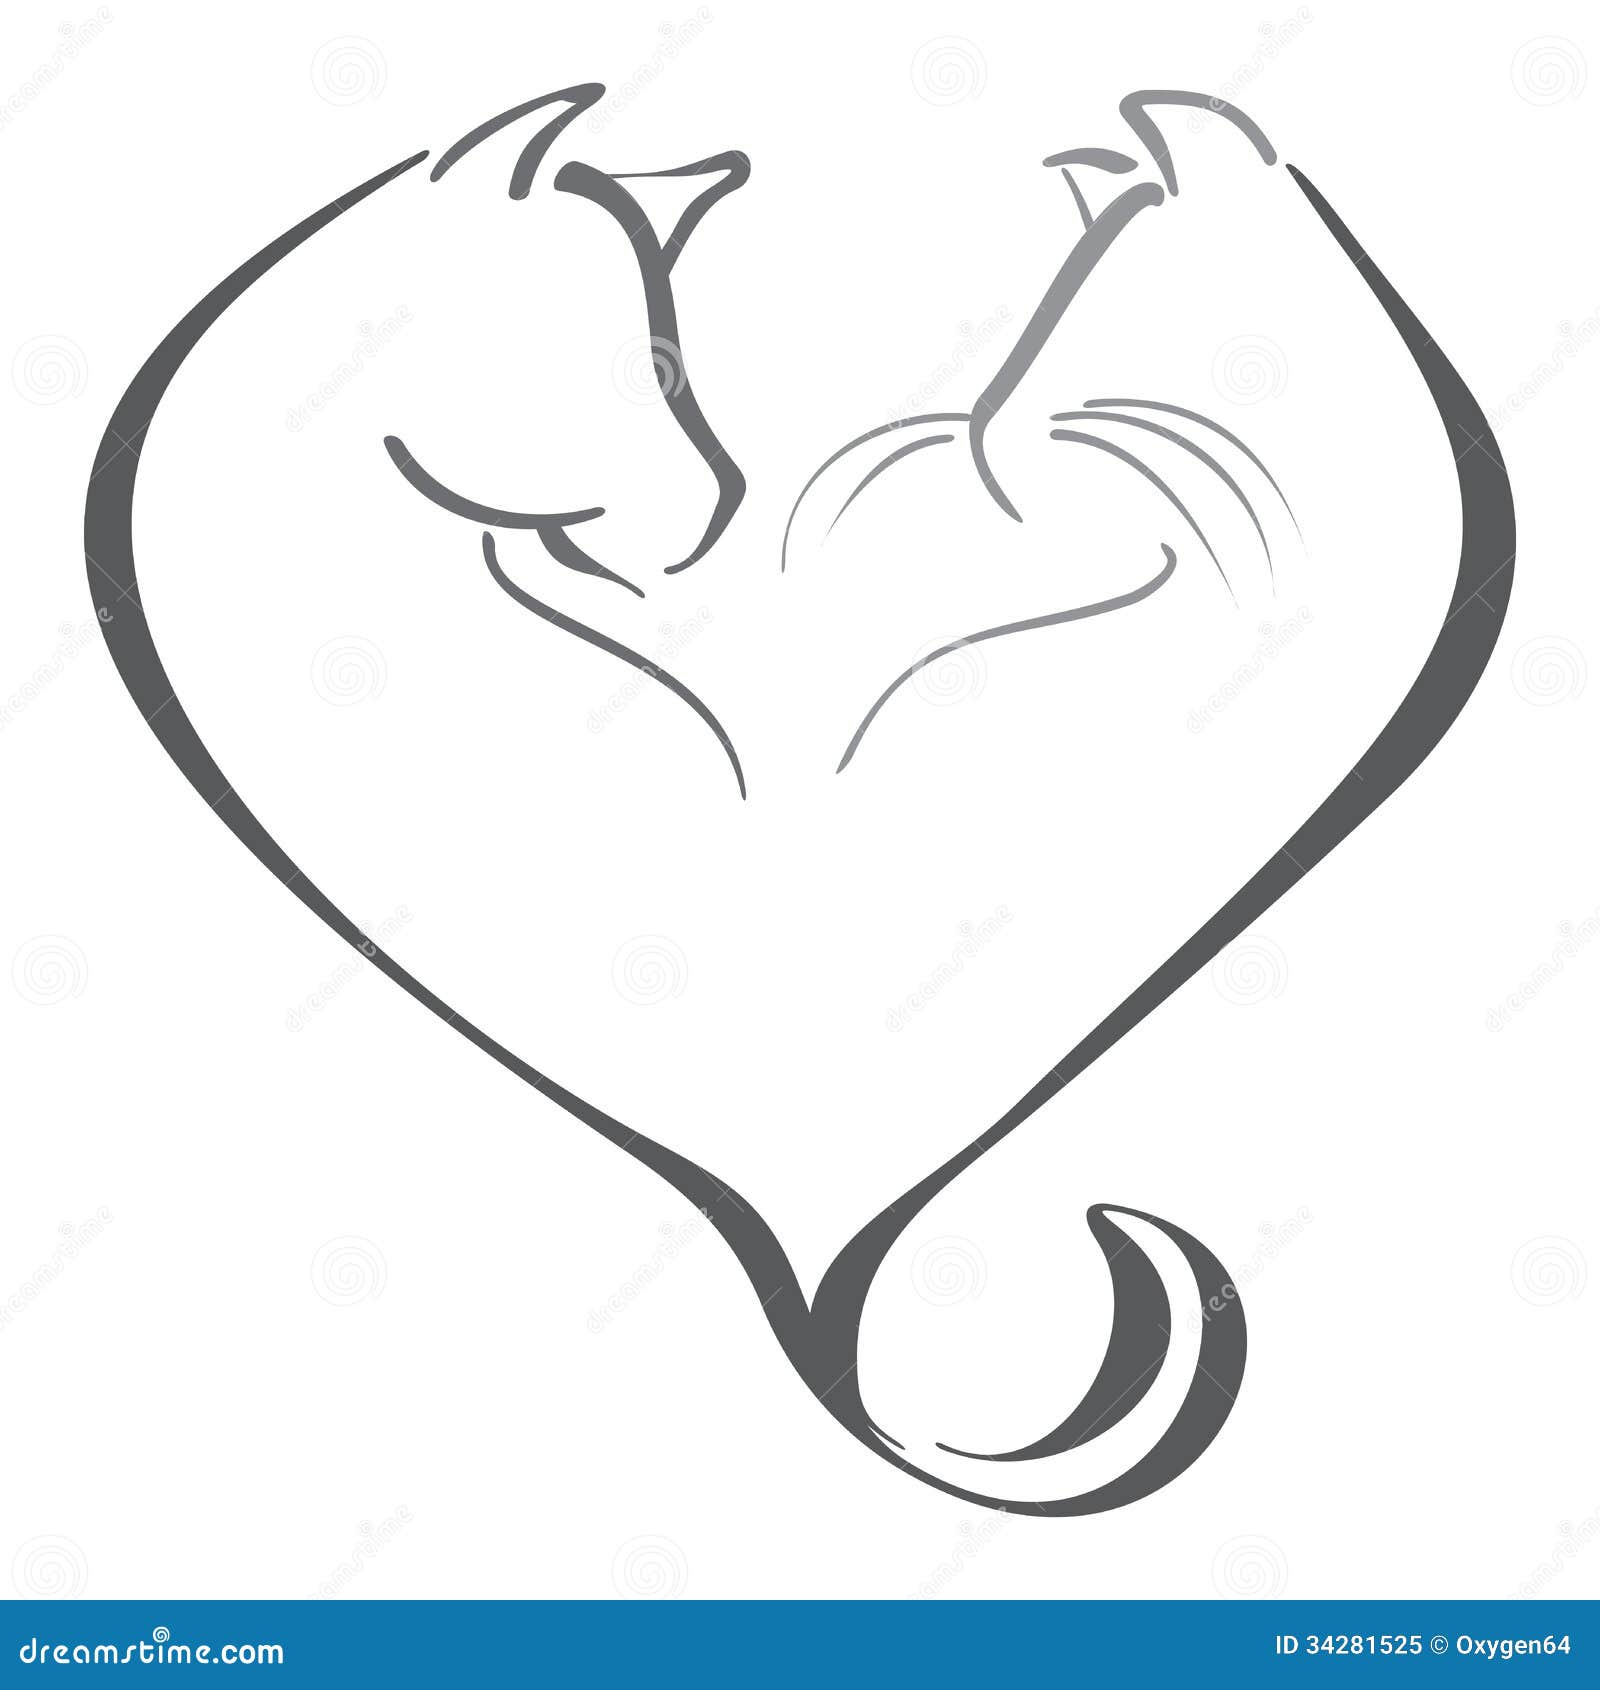 Love for animals stock vector. Illustration of loving - 34281525